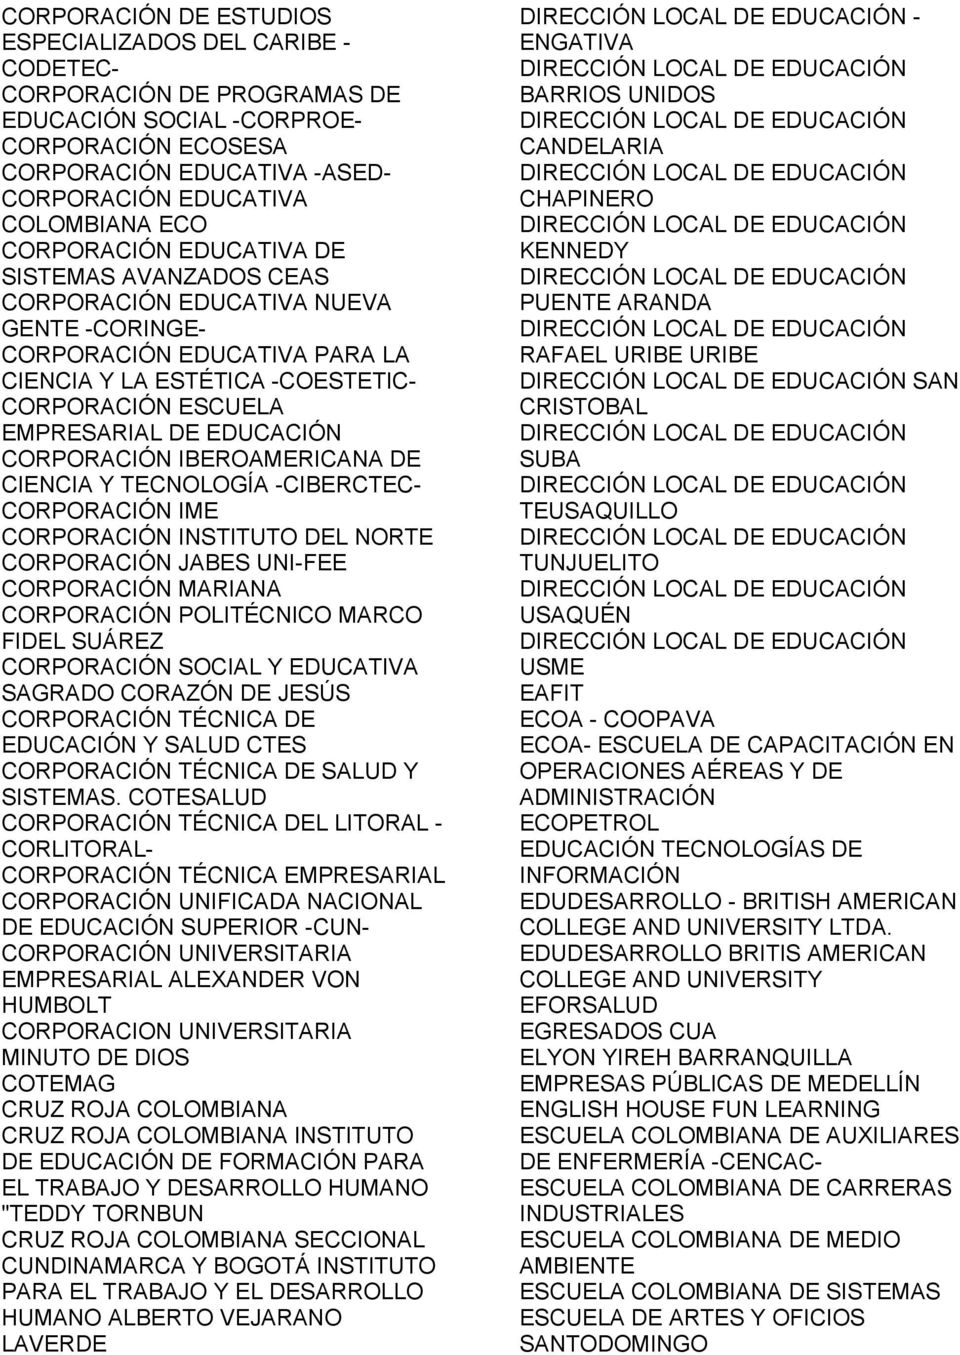 EDUCACIÓN CORPORACIÓN IBEROAMERICANA DE CIENCIA Y TECNOLOGÍA -CIBERCTEC- CORPORACIÓN IME CORPORACIÓN INSTITUTO DEL NORTE CORPORACIÓN JABES UNI-FEE CORPORACIÓN MARIANA CORPORACIÓN POLITÉCNICO MARCO